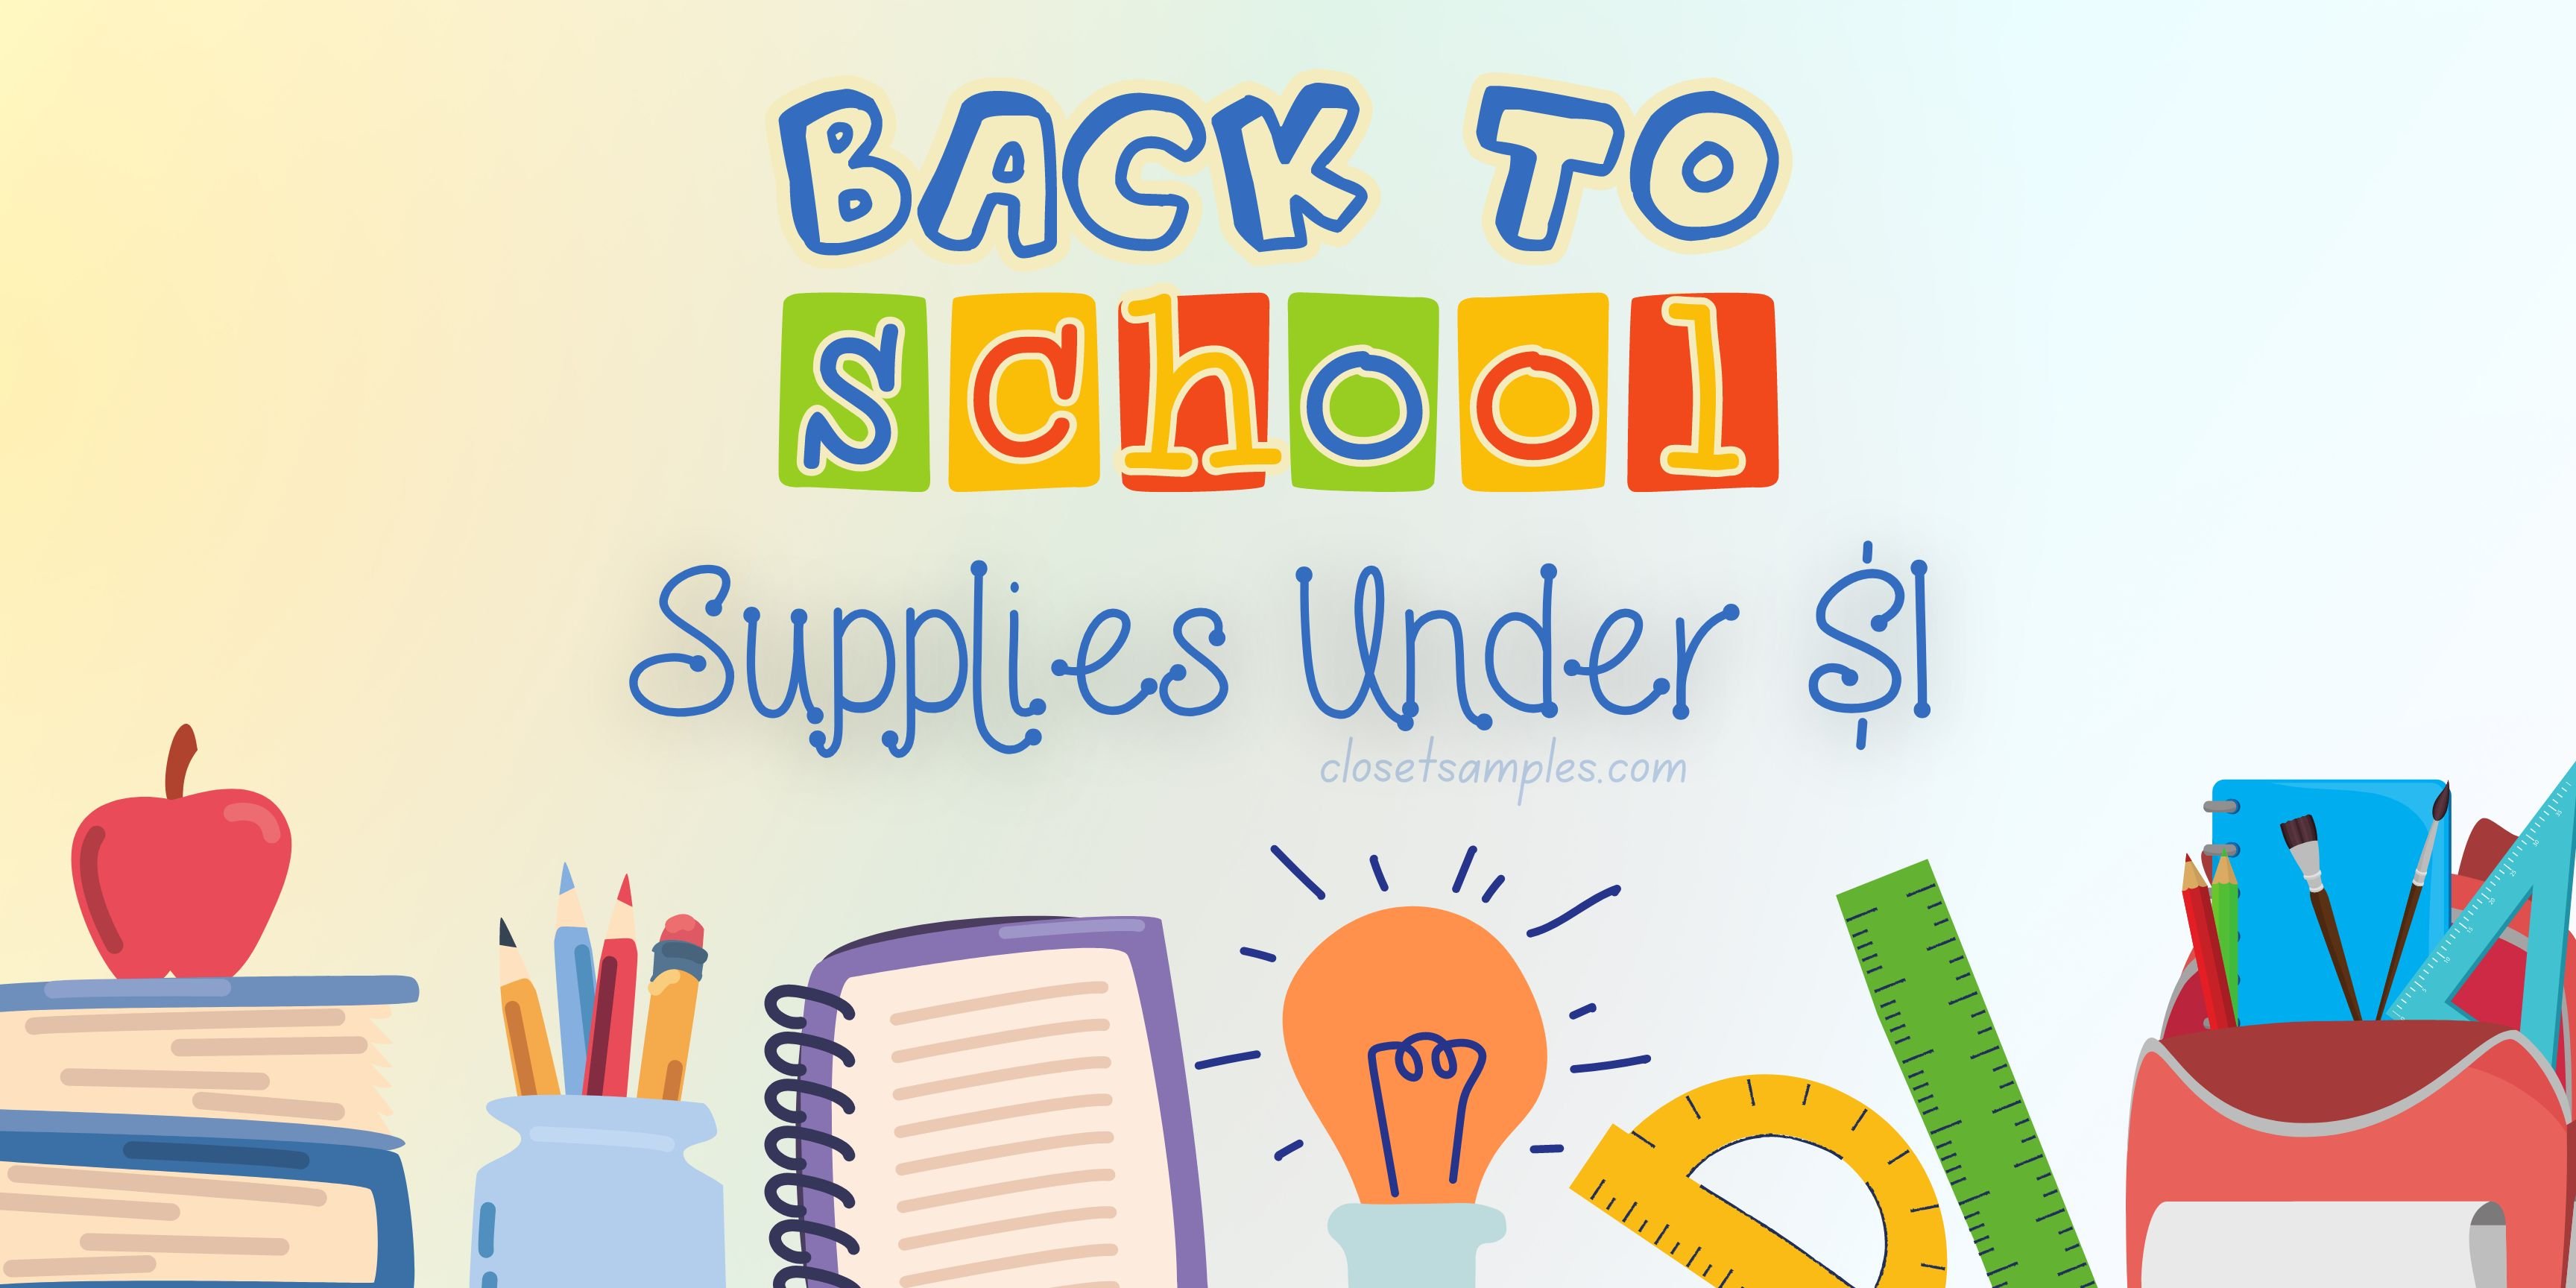 Back to School Supplies Under 1 closetsamples